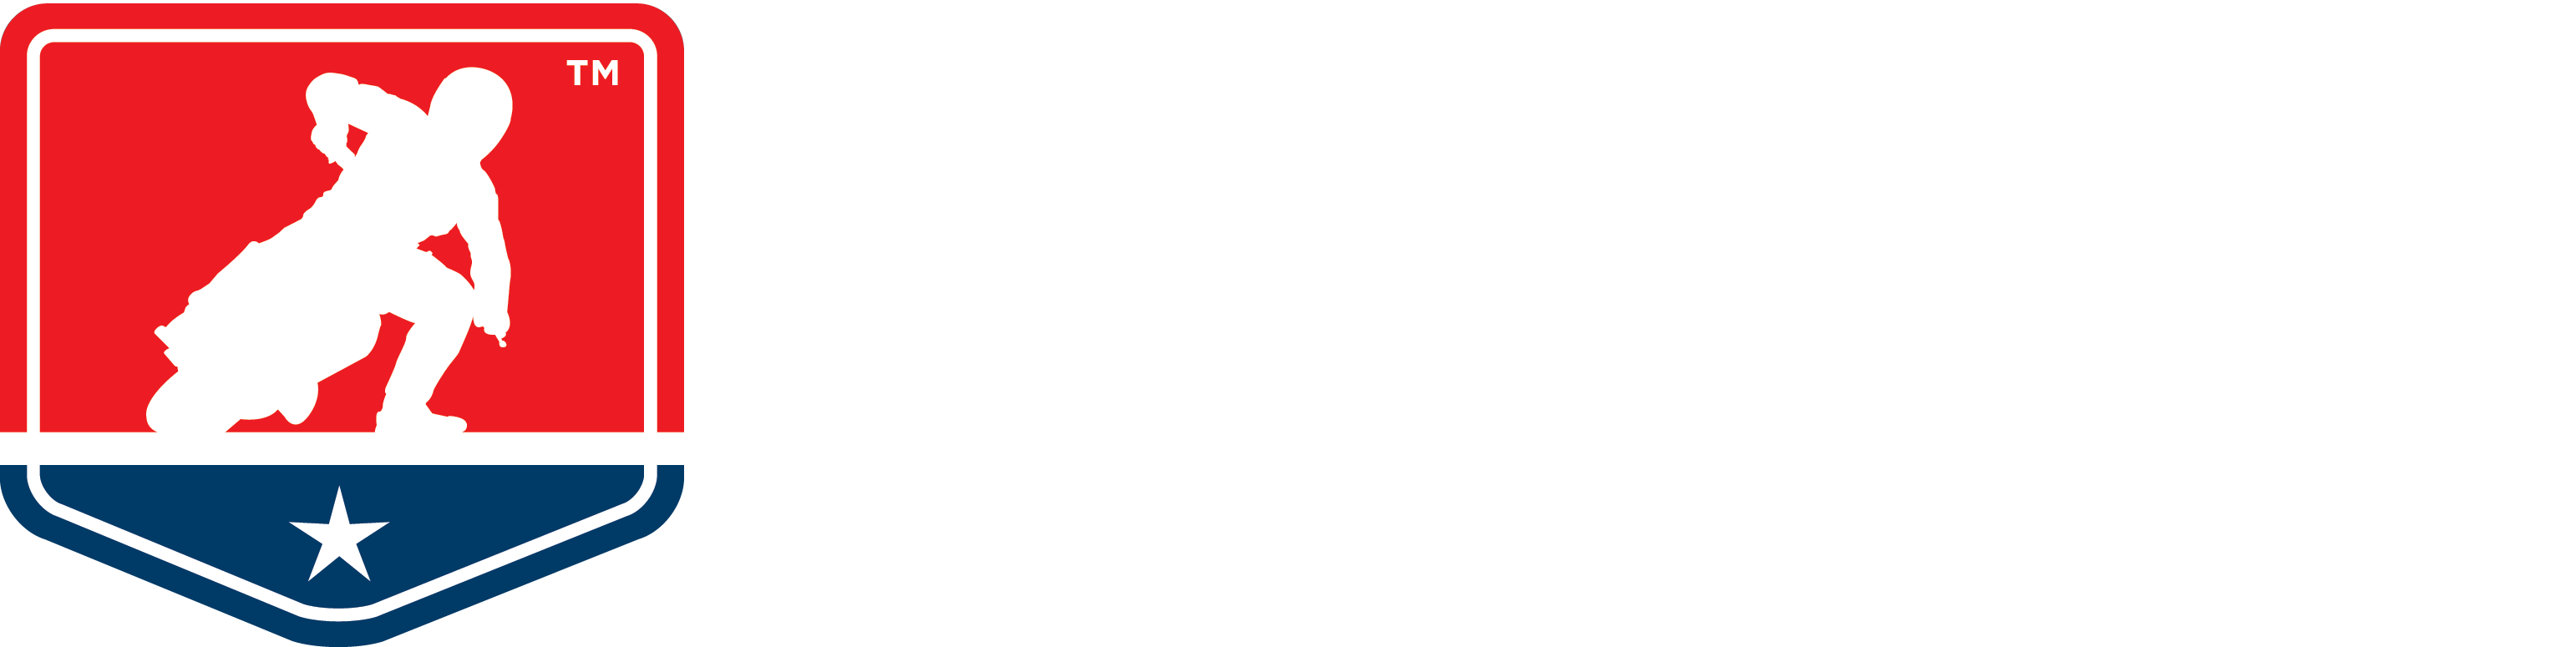 YouTube Flat Logo Vector - Am